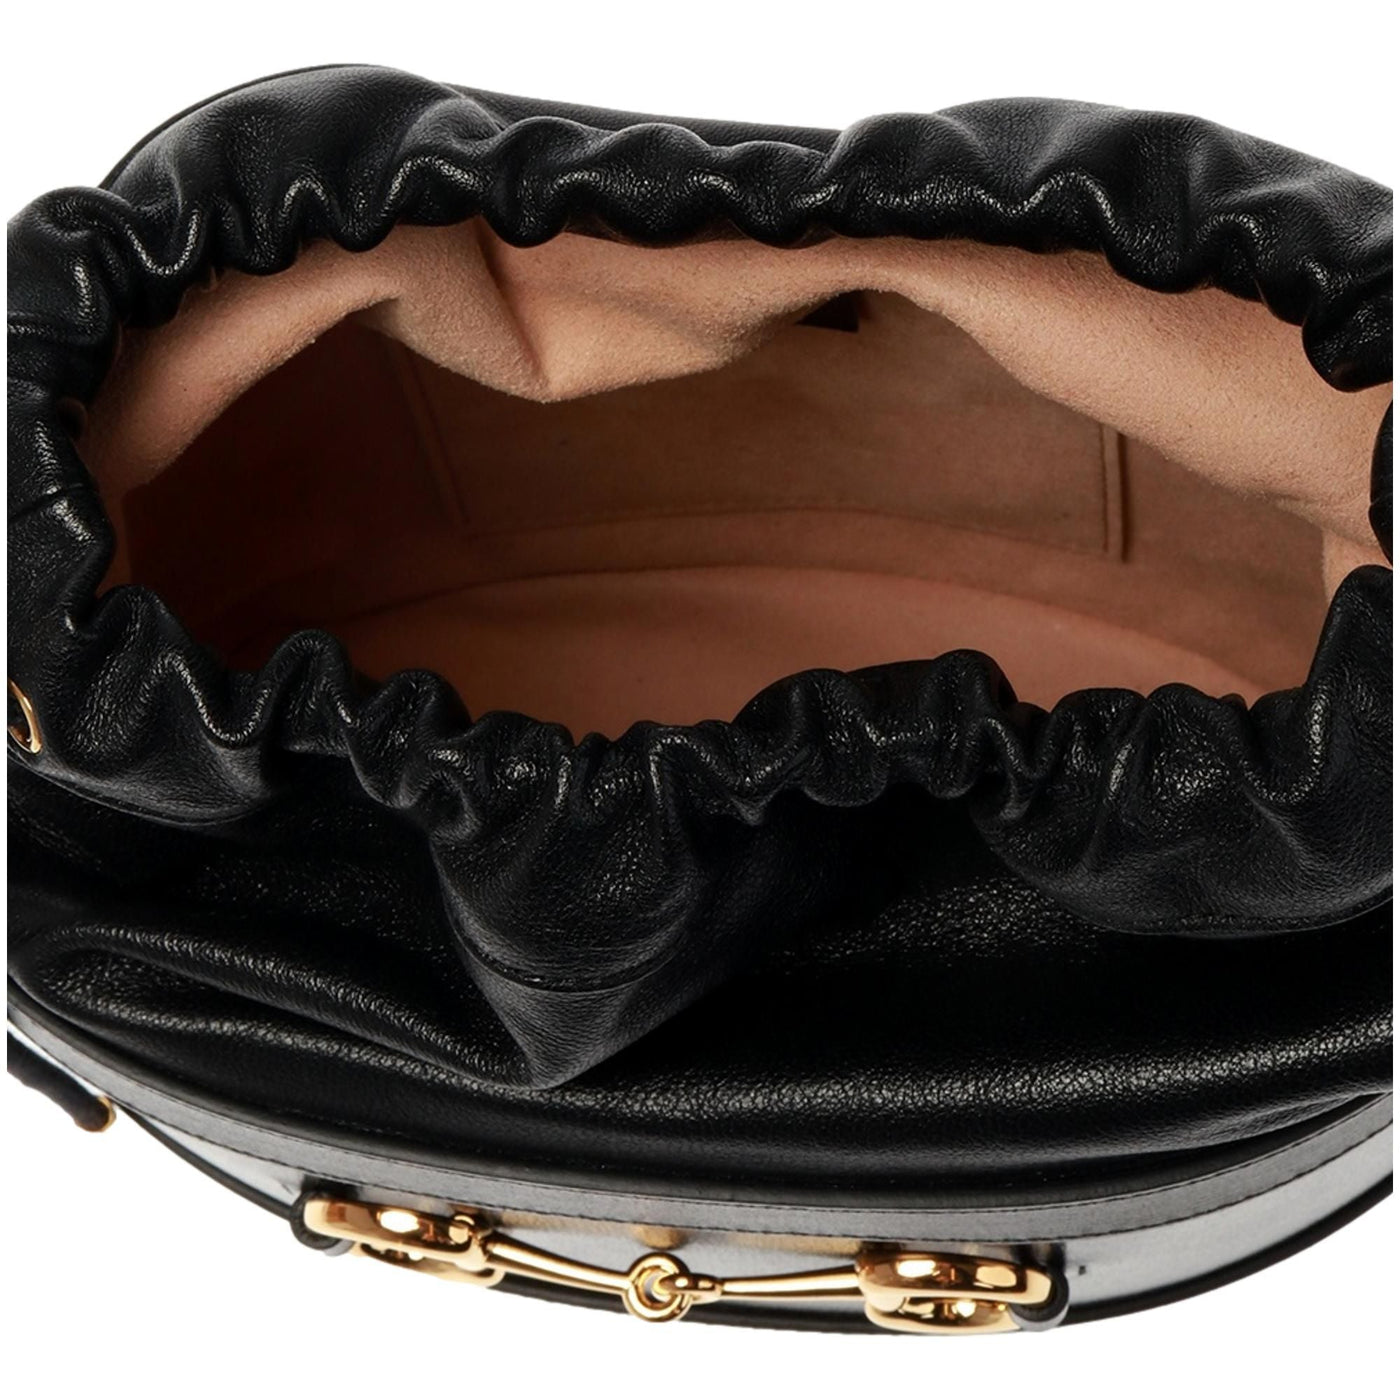 Gucci 1955 Horsebit Black Leather Bucket Bag - LUXURYMRKT